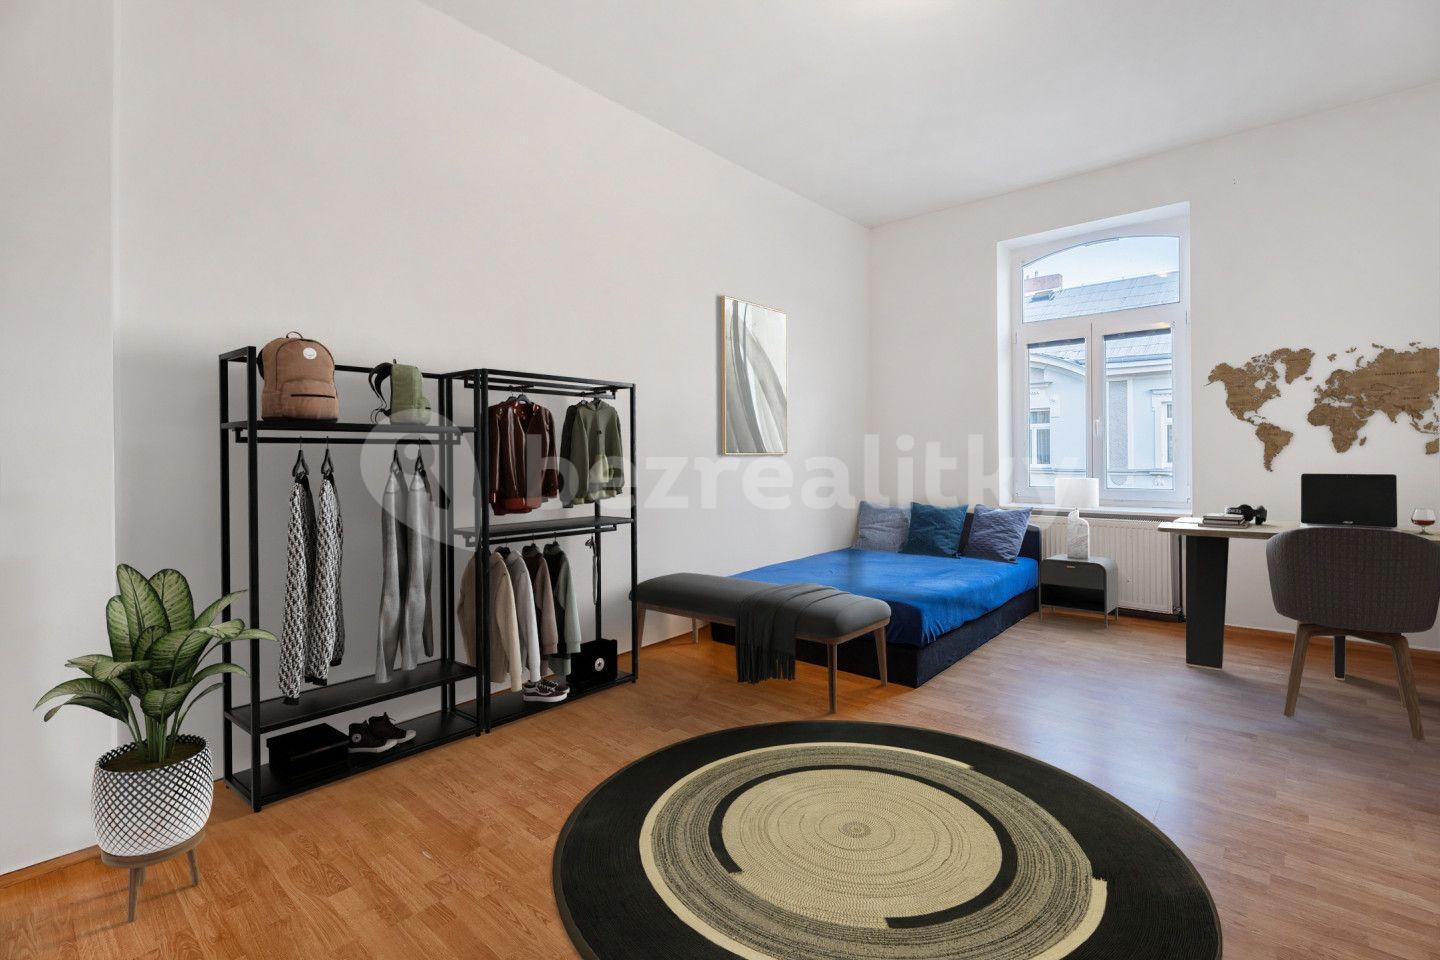 2 bedroom flat for sale, 70 m², Bezručova, Děčín, Ústecký Region